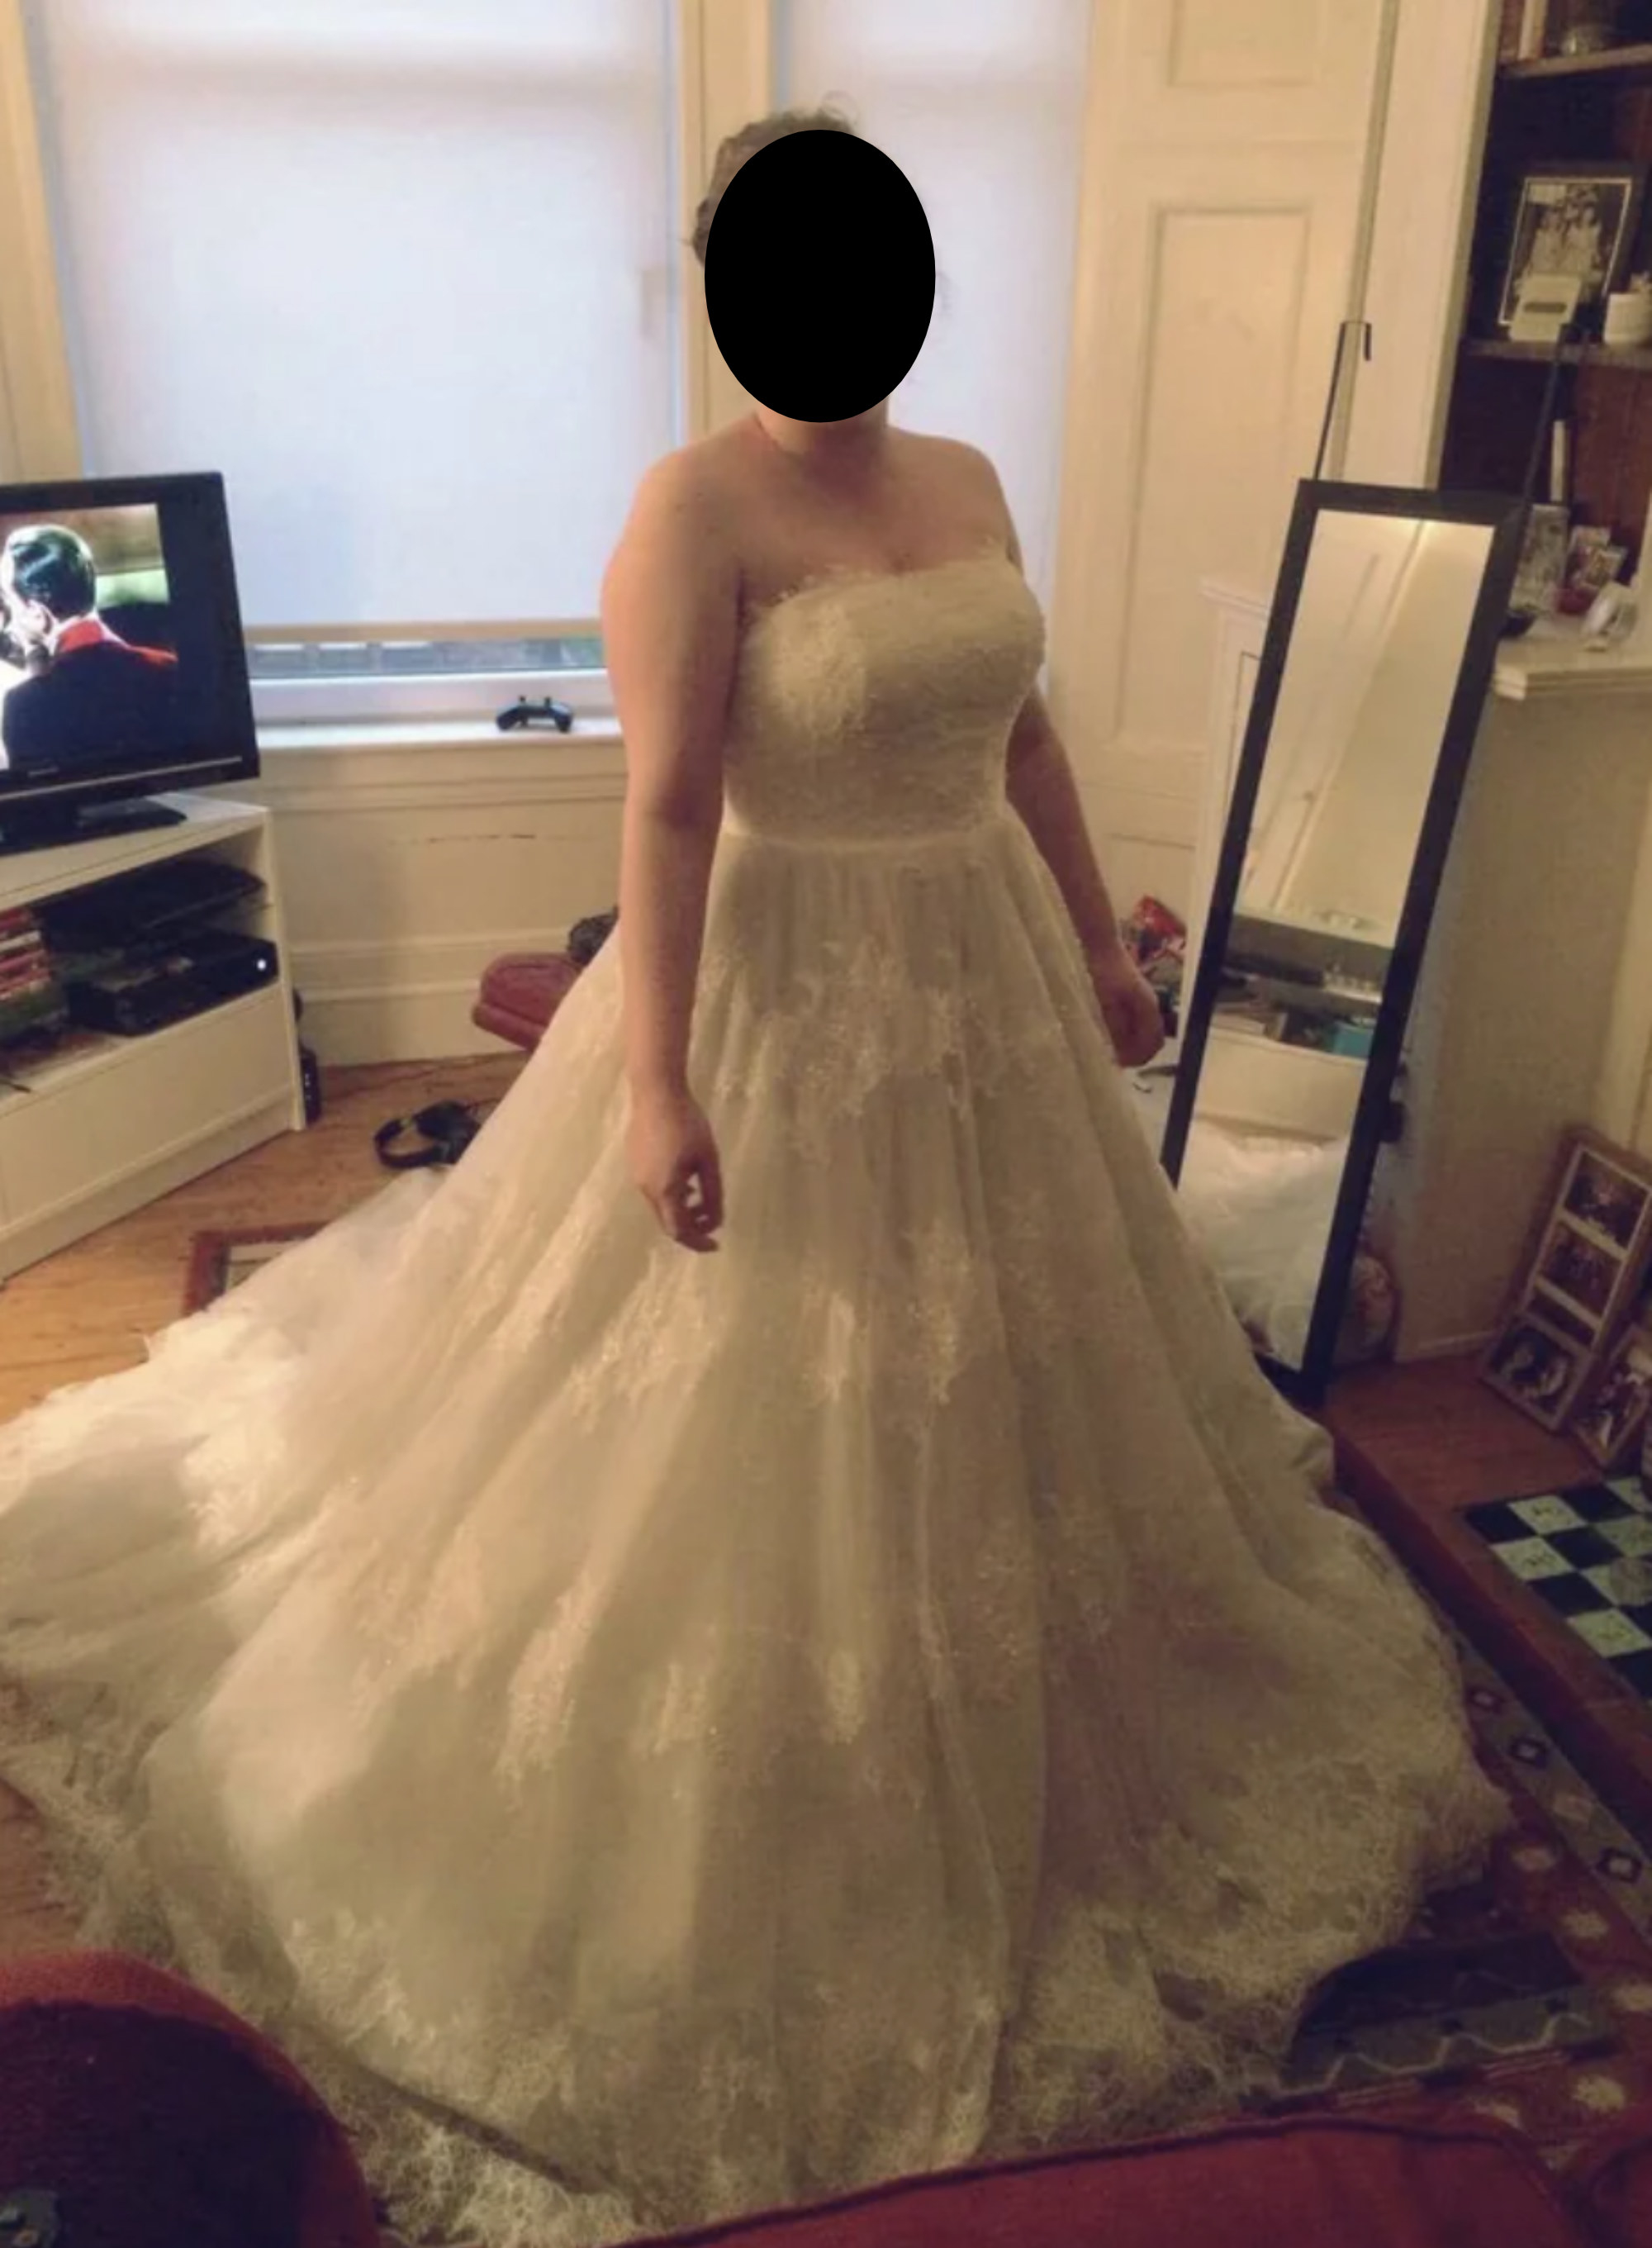 A woman wearing a wedding dress